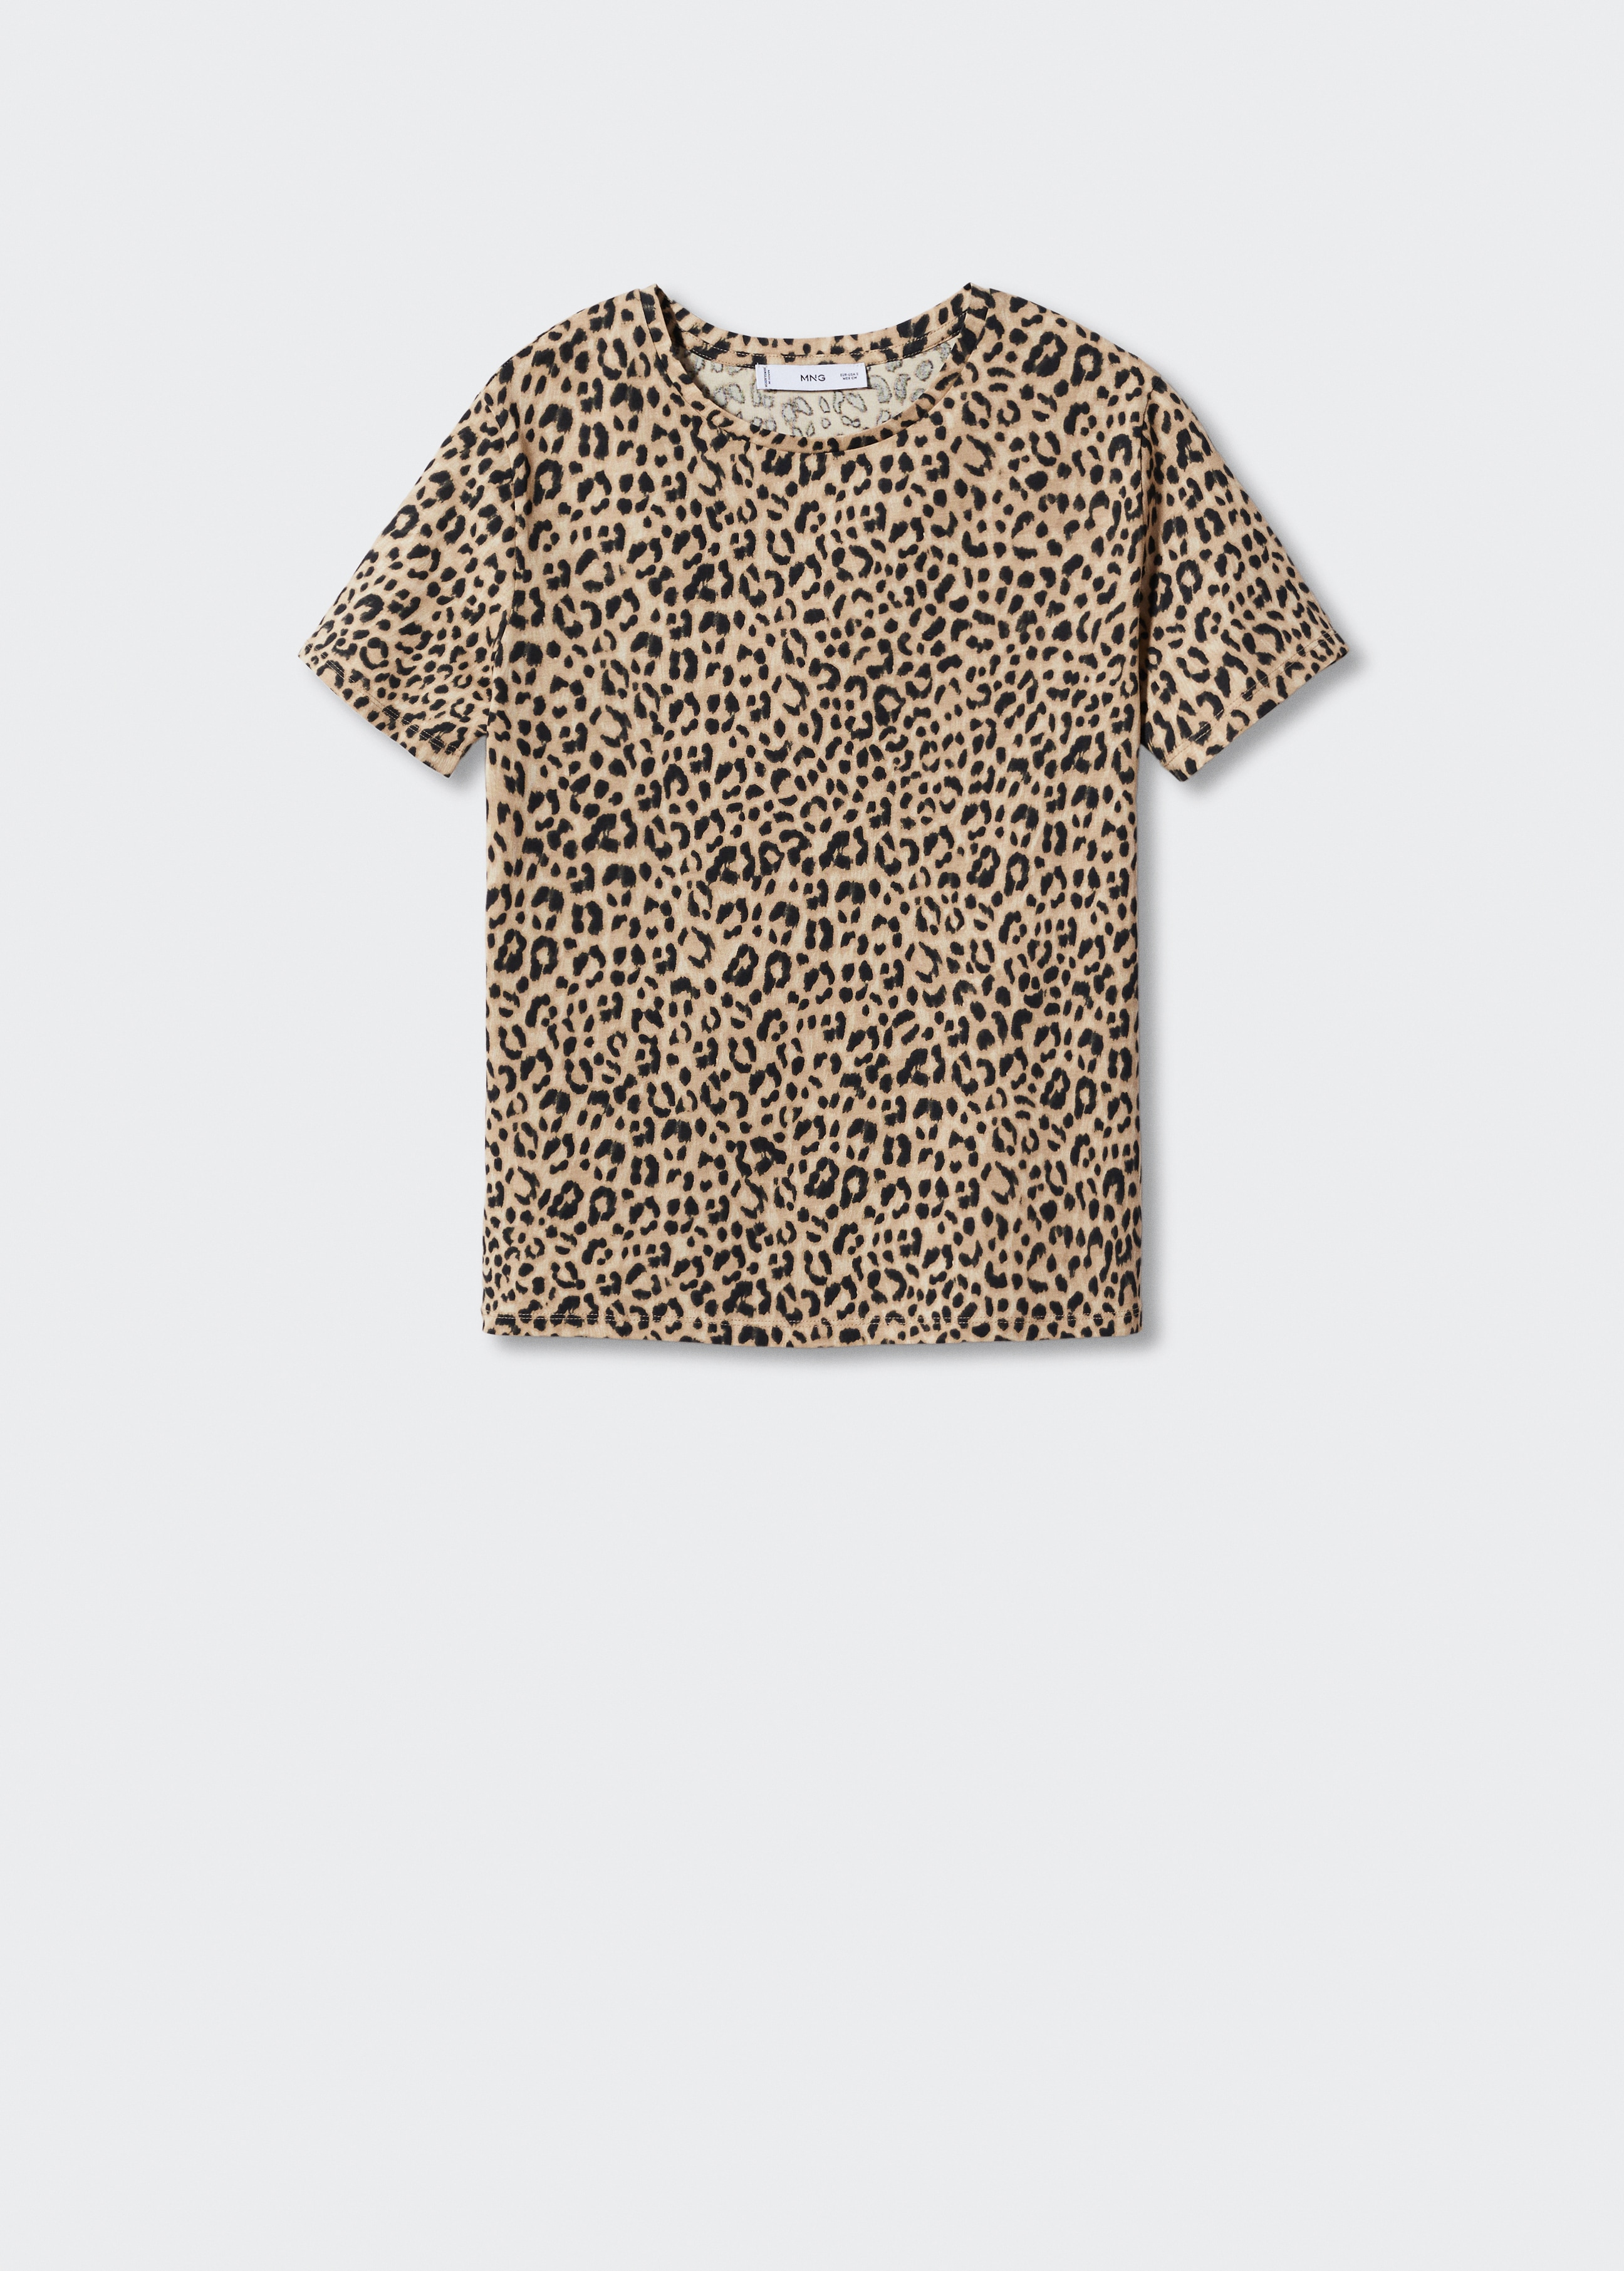 Camiseta animal print - Artículo sin modelo